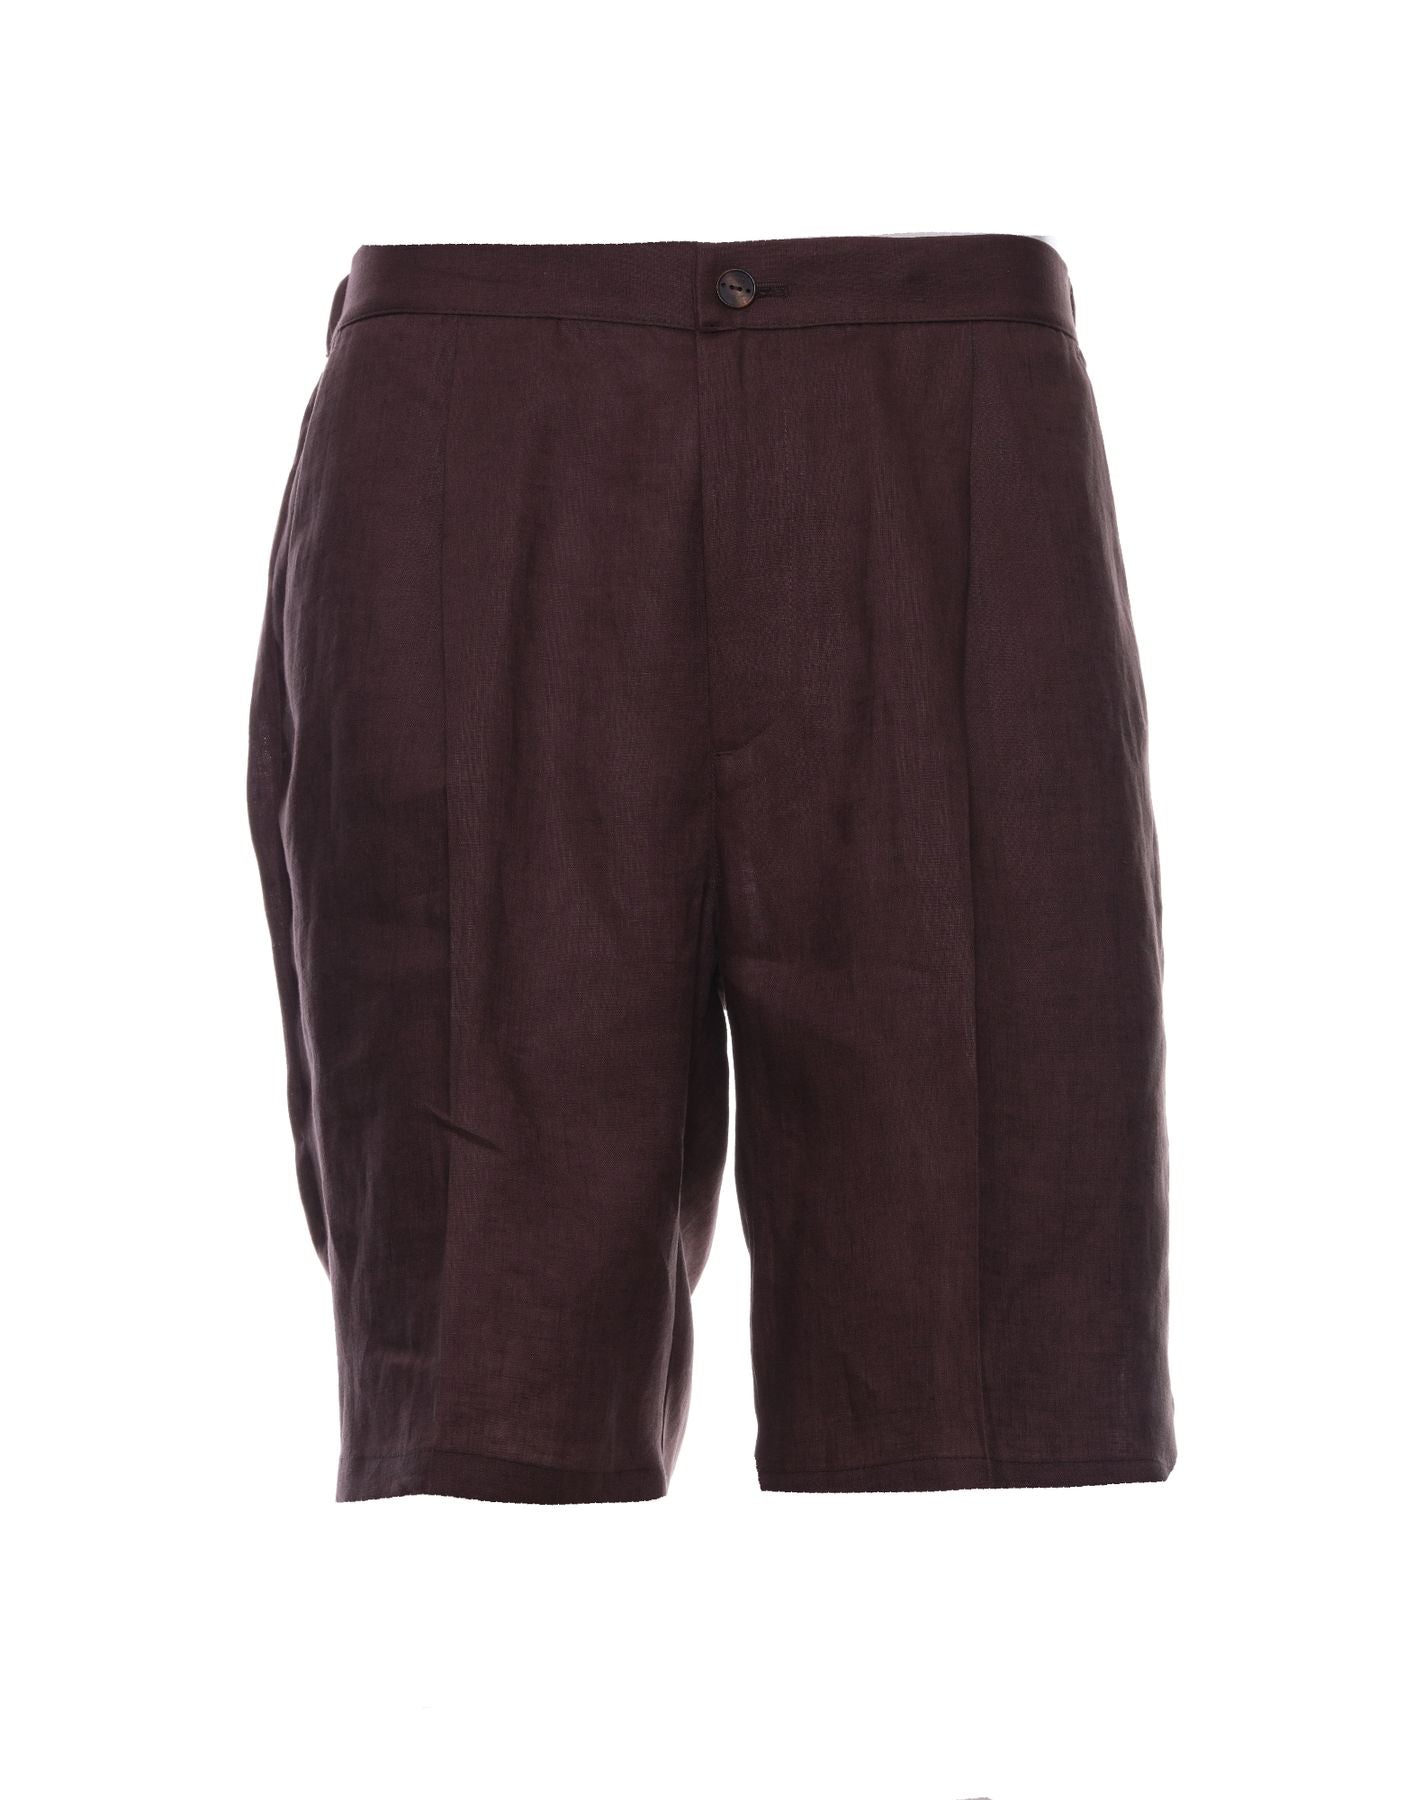 Shorts for man TORRE LAPILLO F10 1015 Hevo